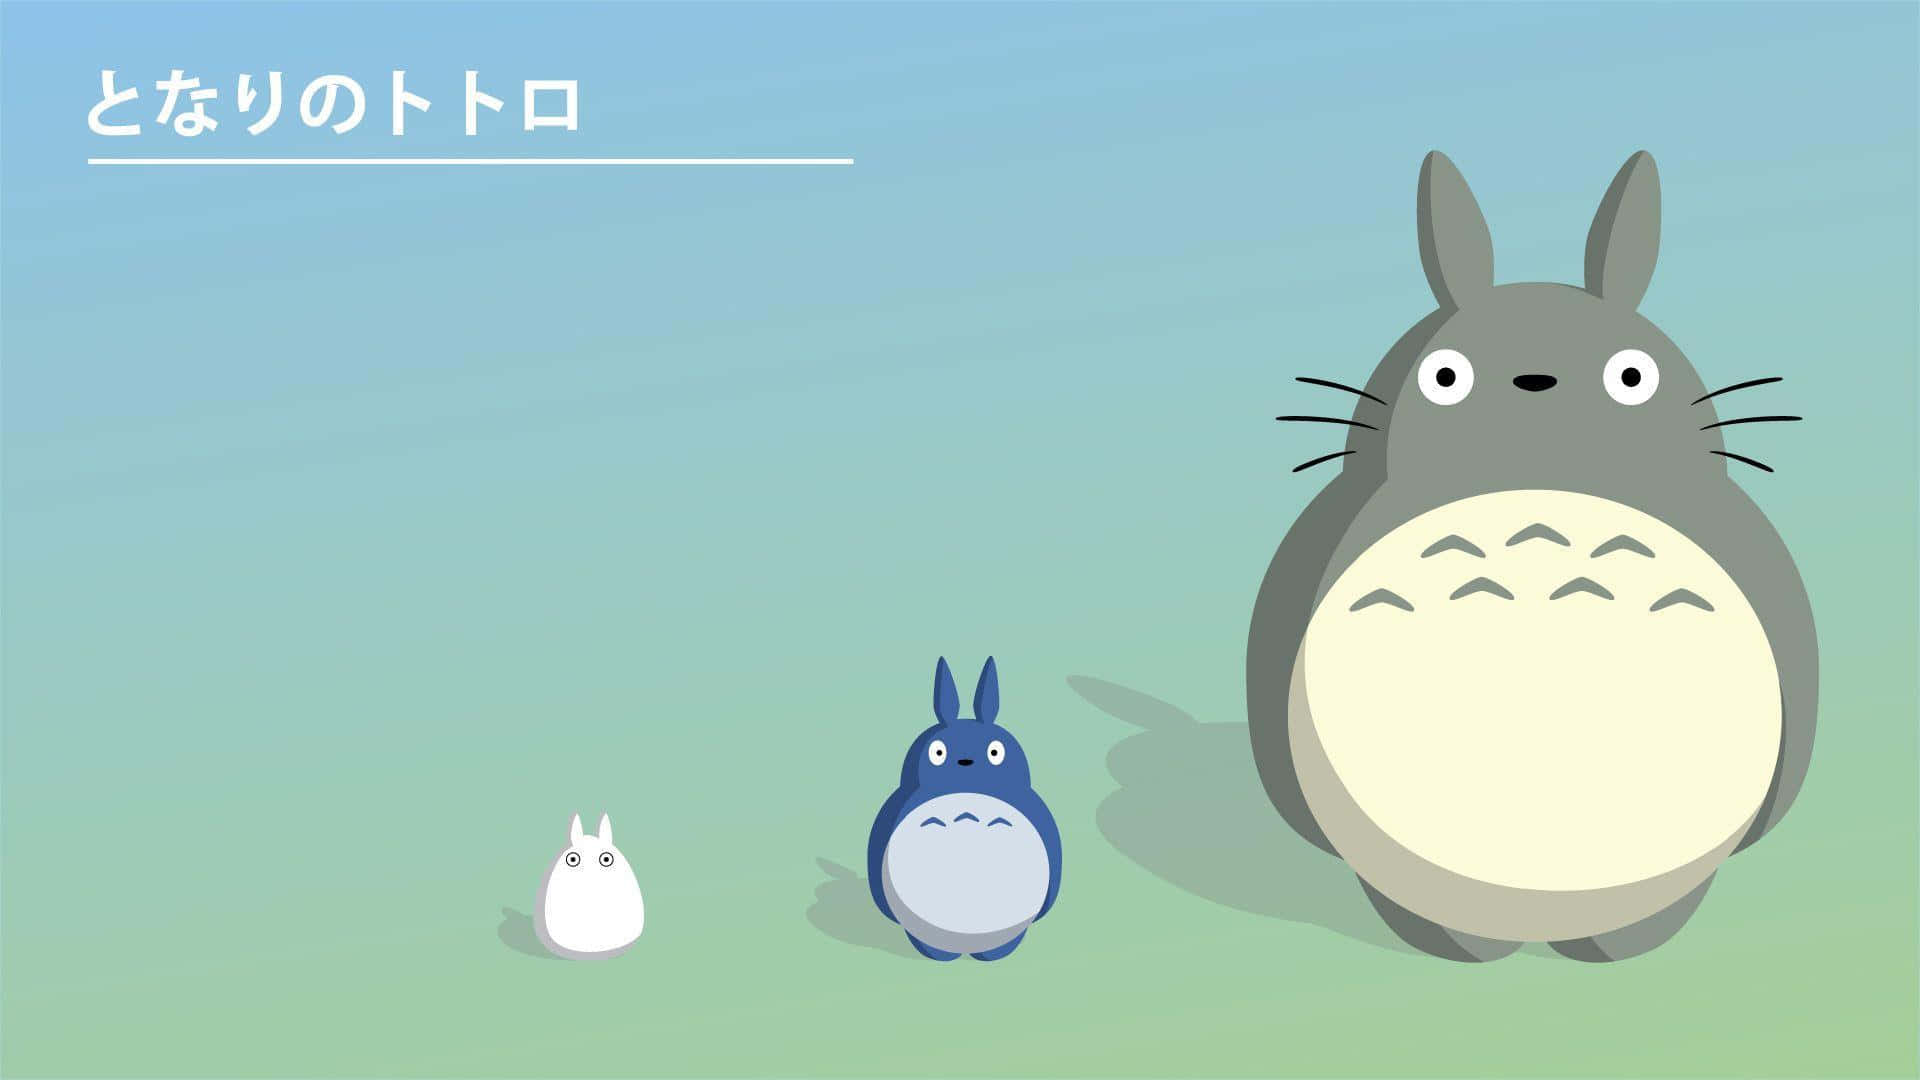 "My Neighbor Totoro: Bringing Wonder and Adventure to Everyday Life"